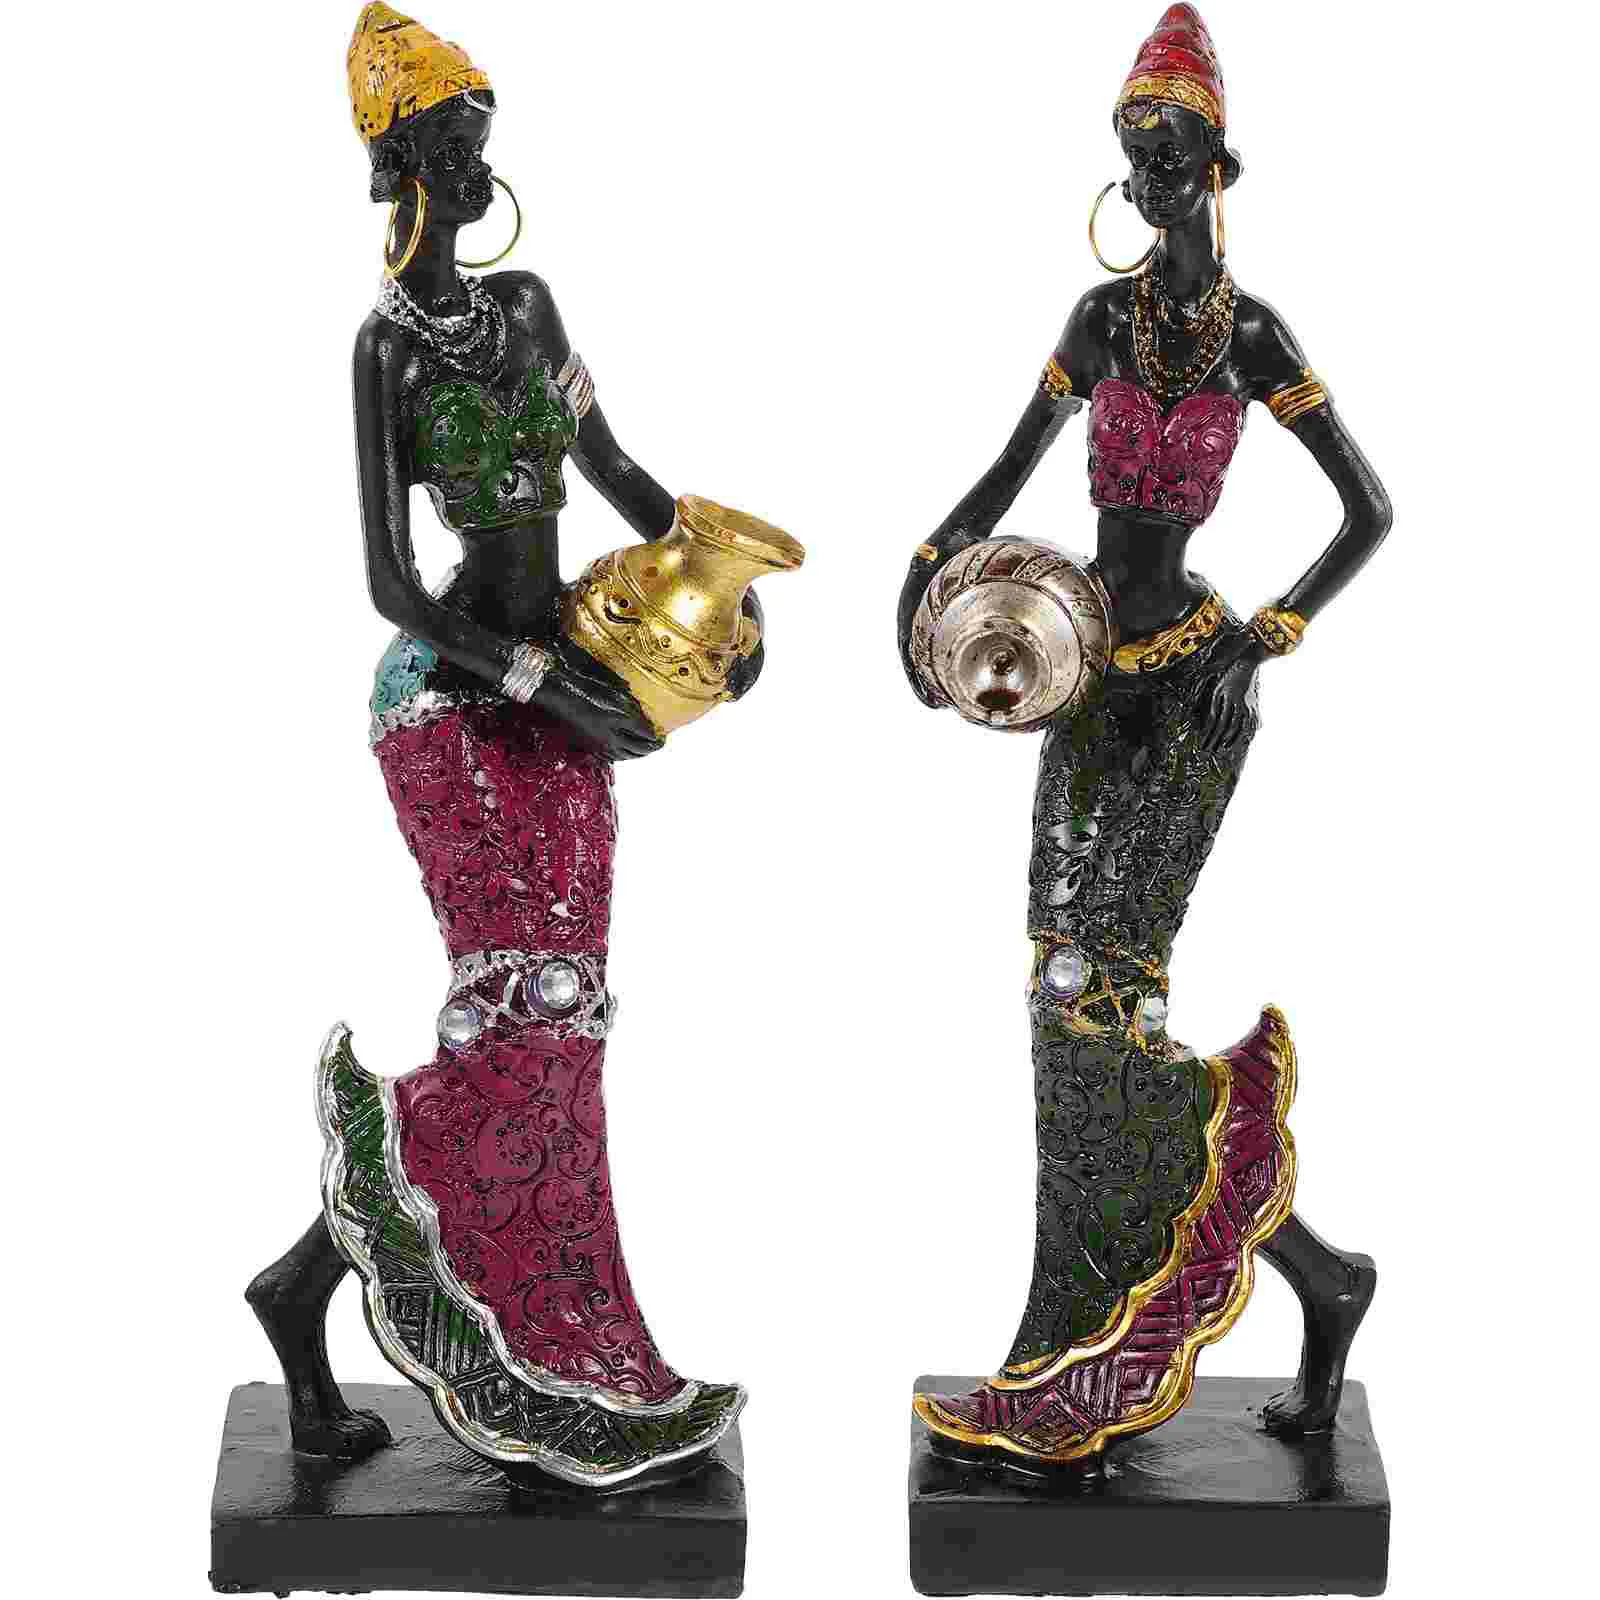 

2 Pcs Tabletop Decor African Women Figure Statue Resin Figurines Artistic Lady Artwork Miss